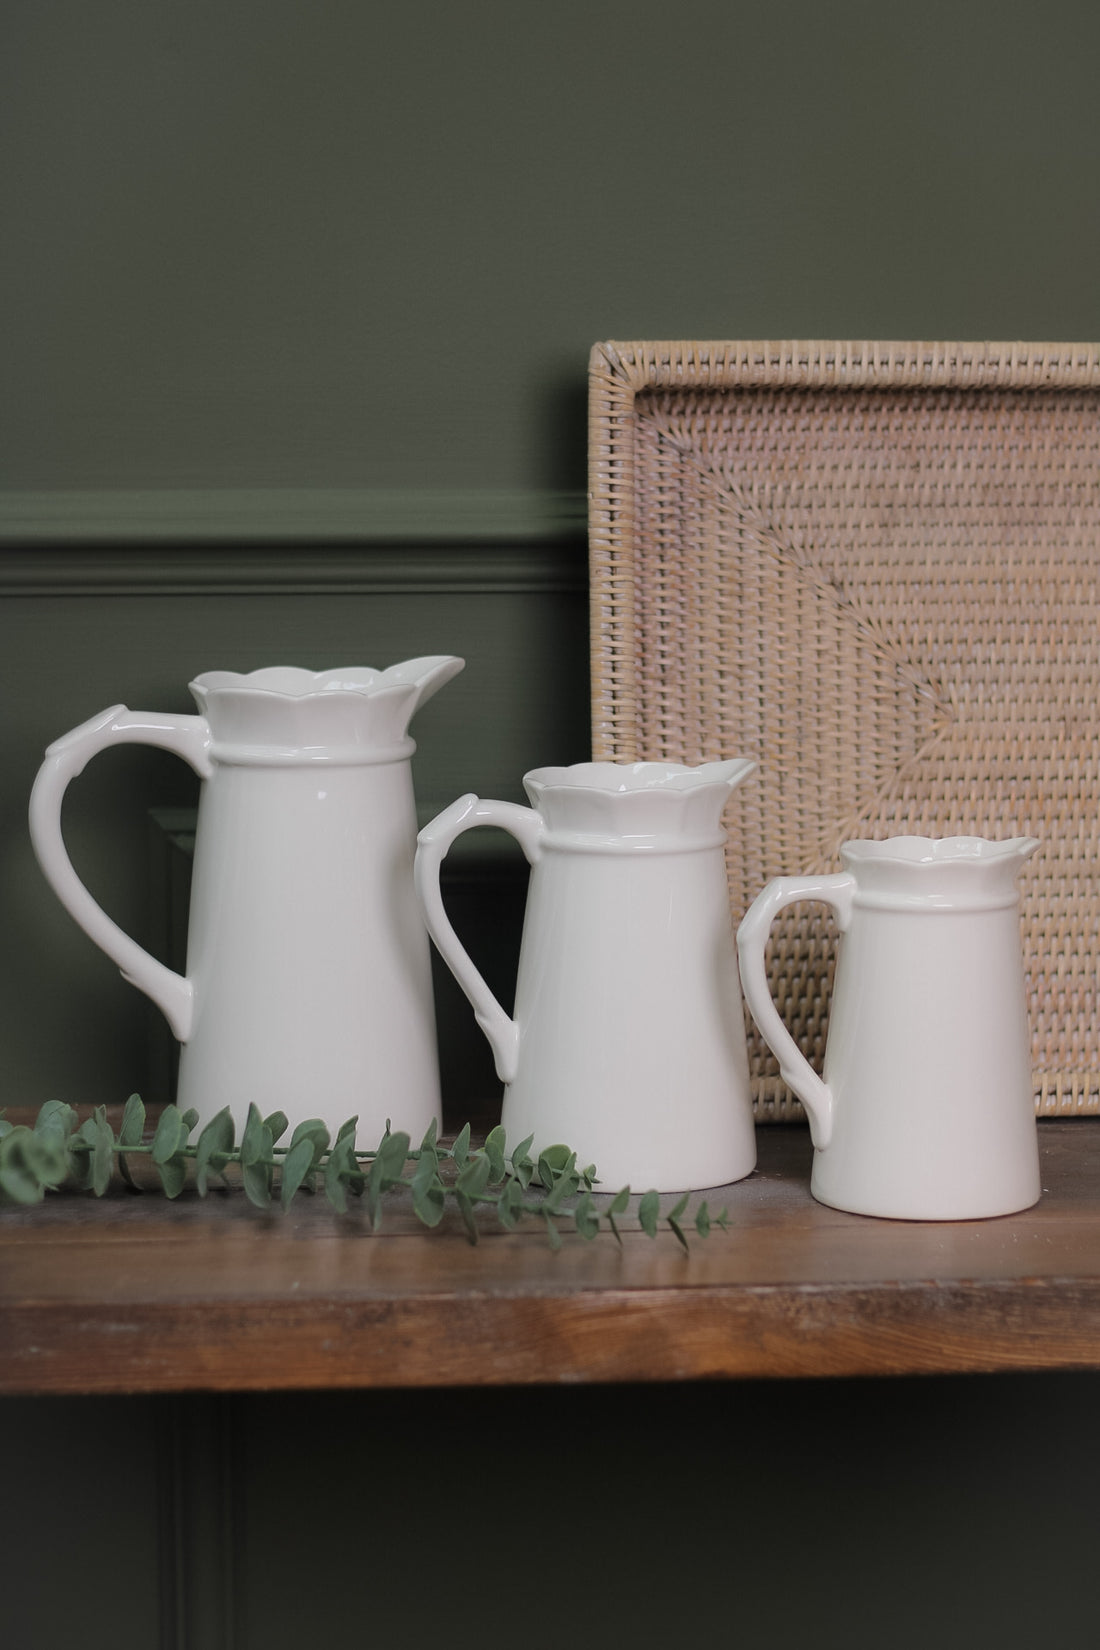 White ceramic jugs